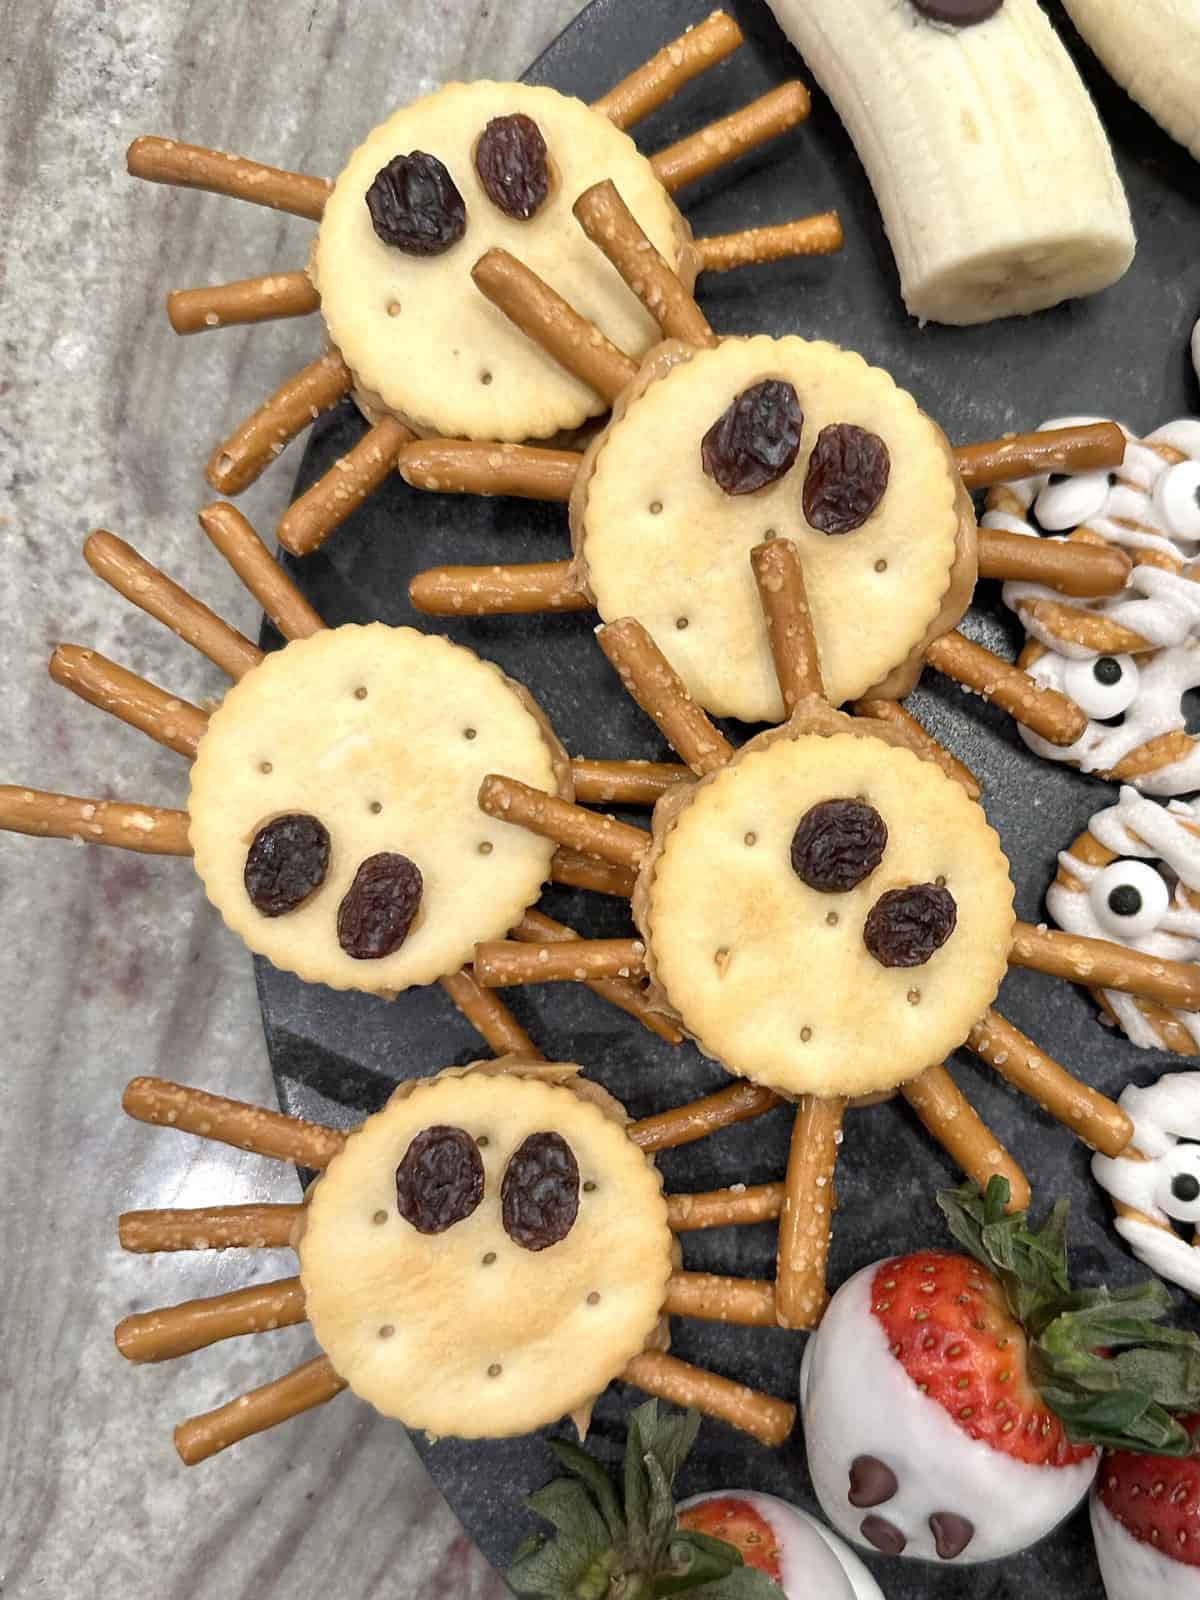 5 Spooky Cute Halloween Treats Peanut Butter Cracker Spiders by The BakerMama